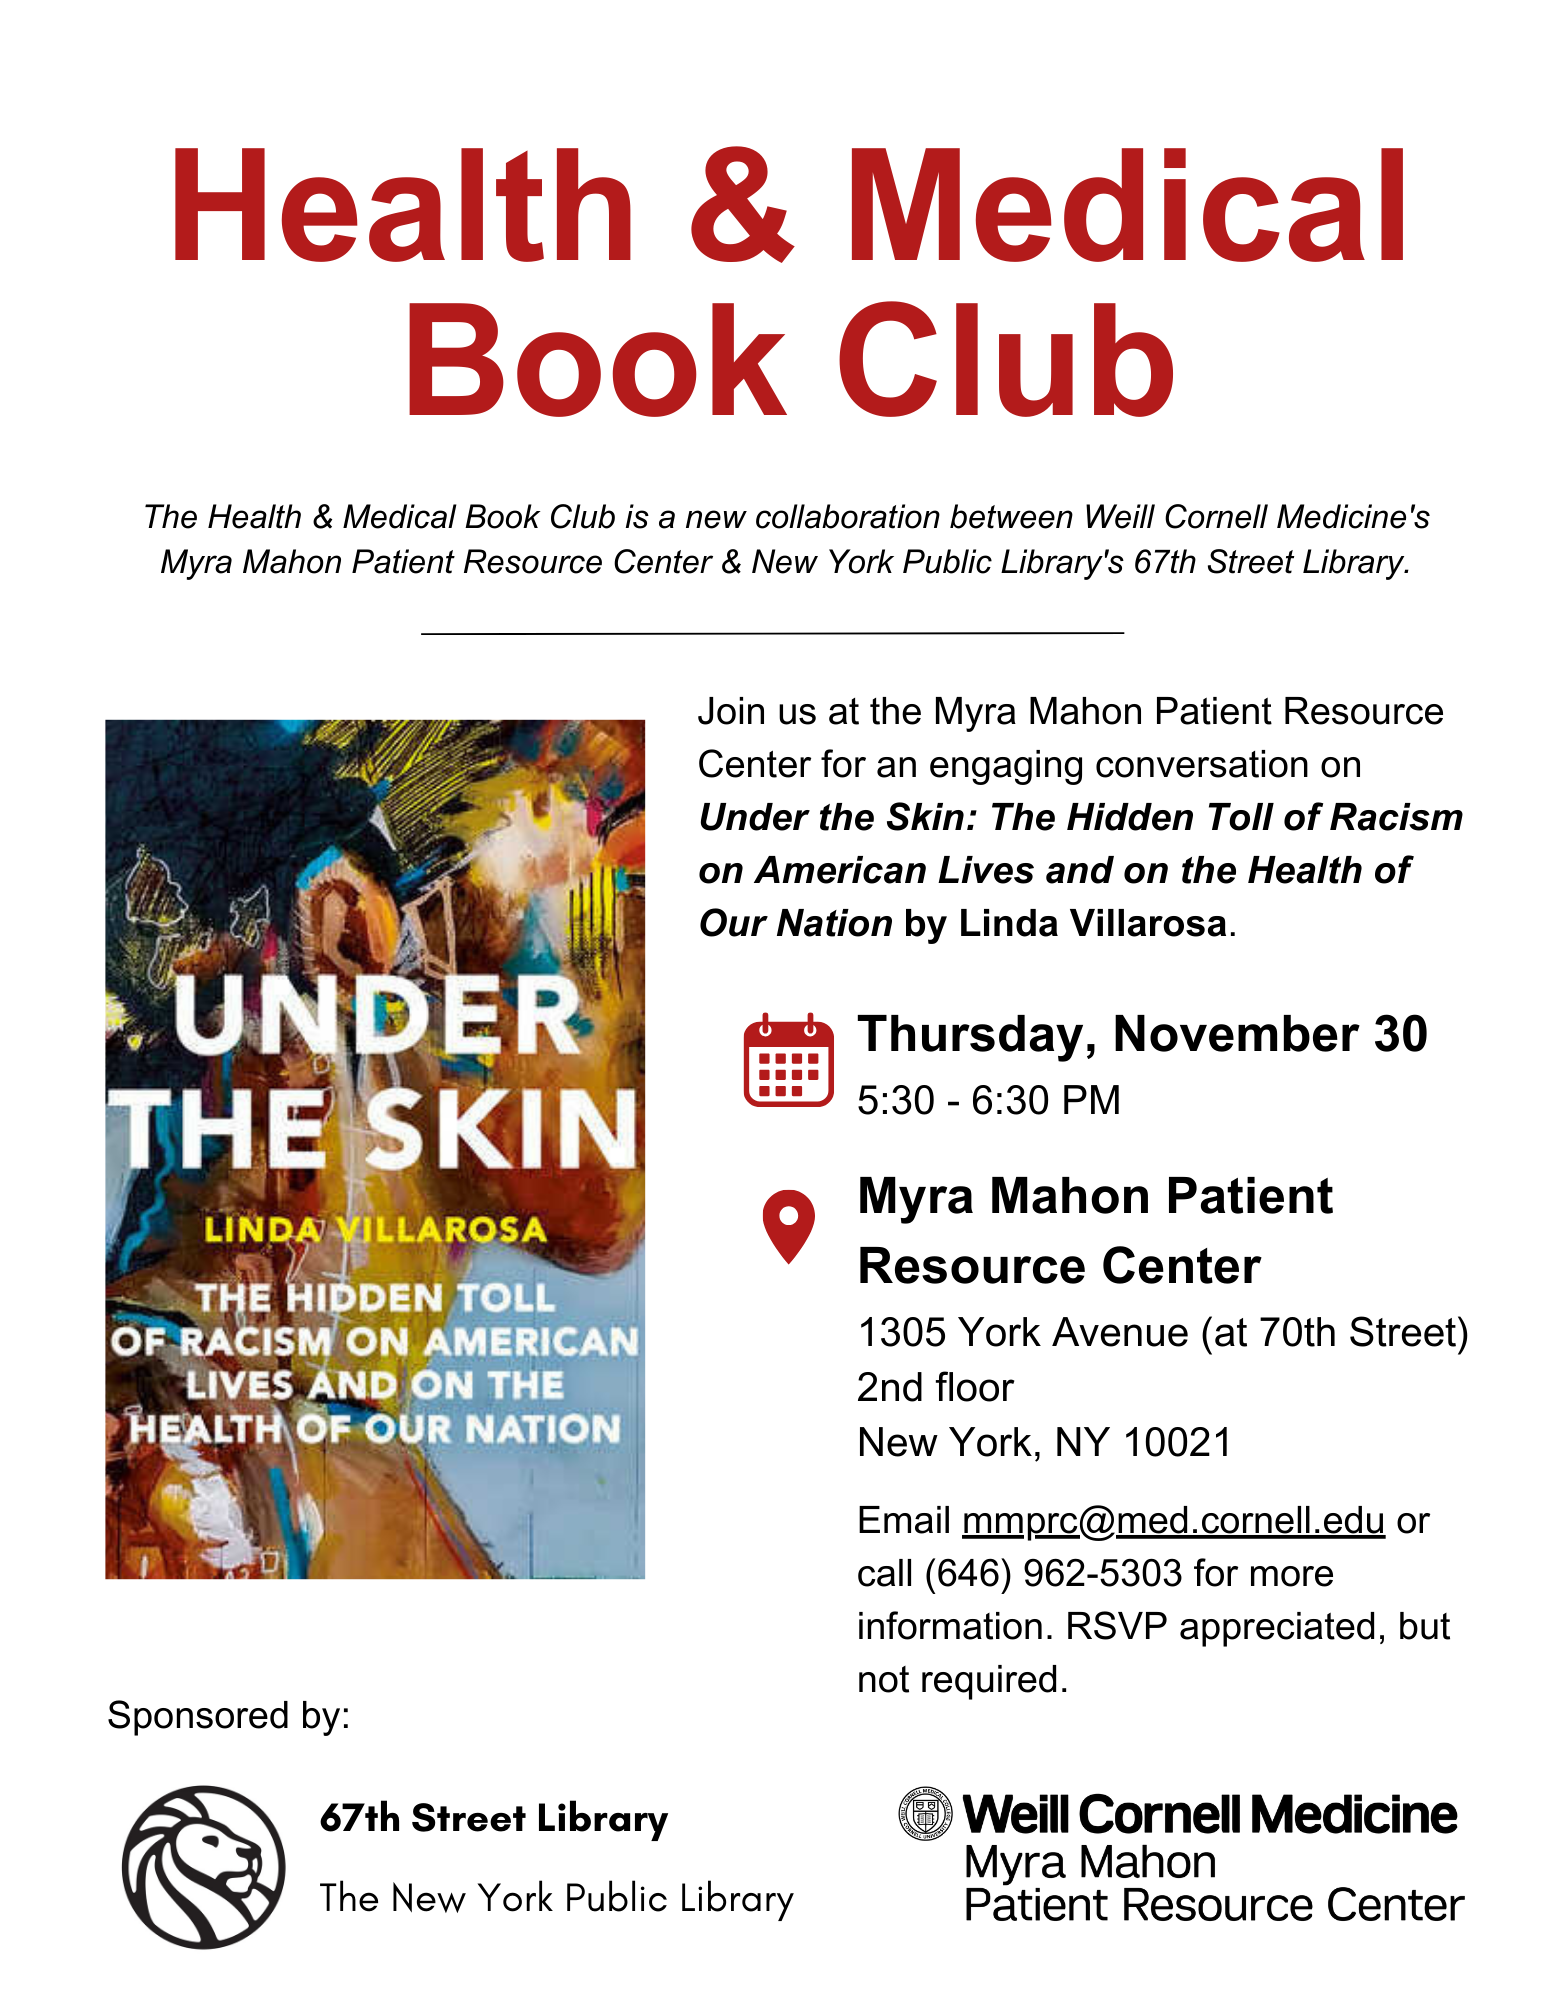 Under the Skin book club discussion